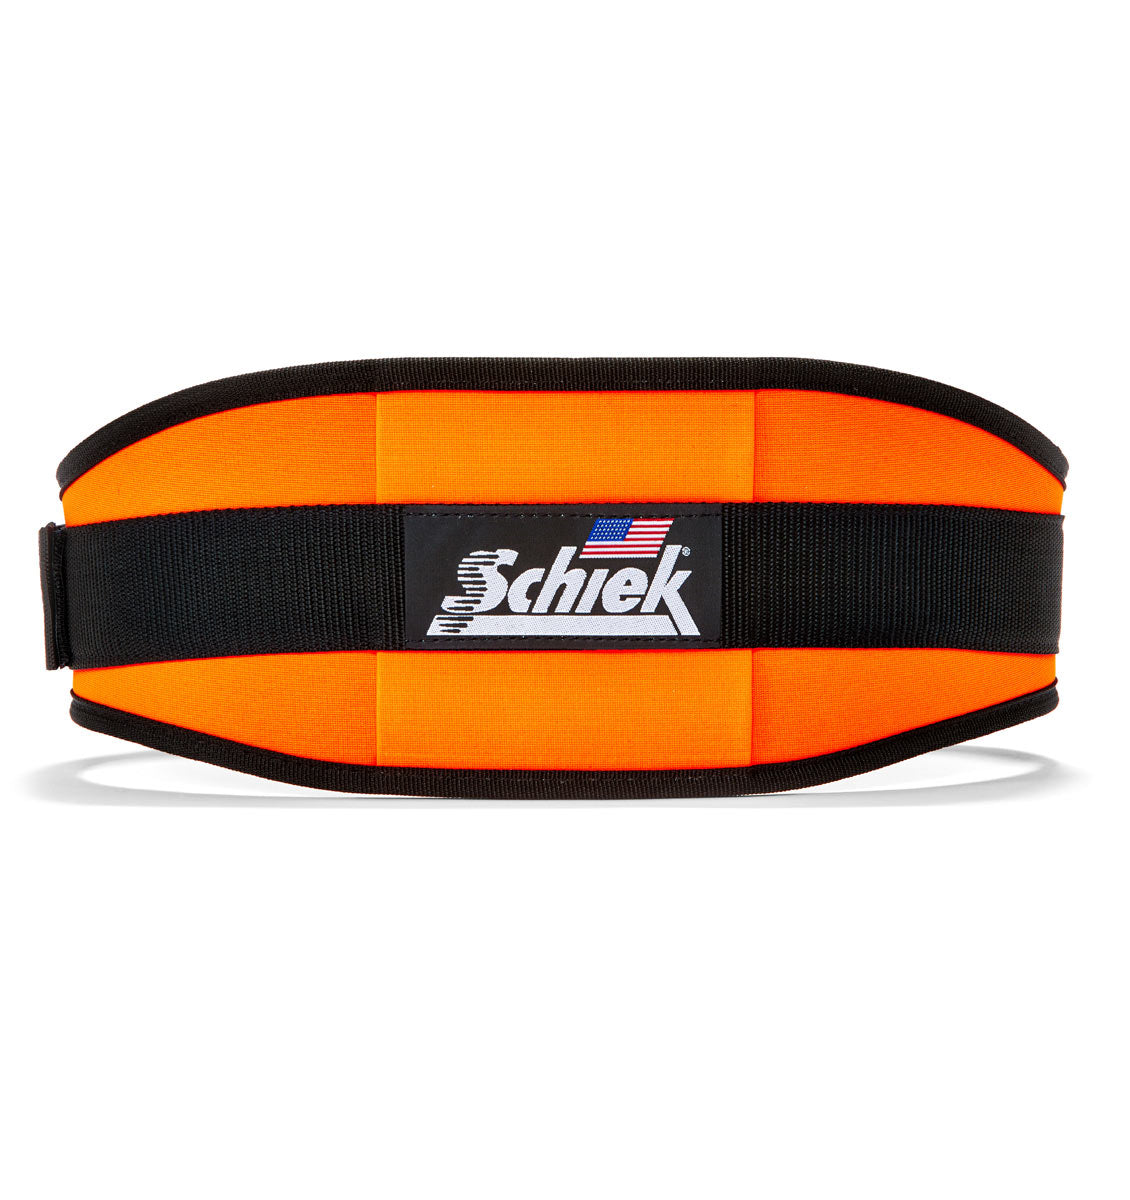 2006 Schiek Contour Weight Lifting Belt Orange Back